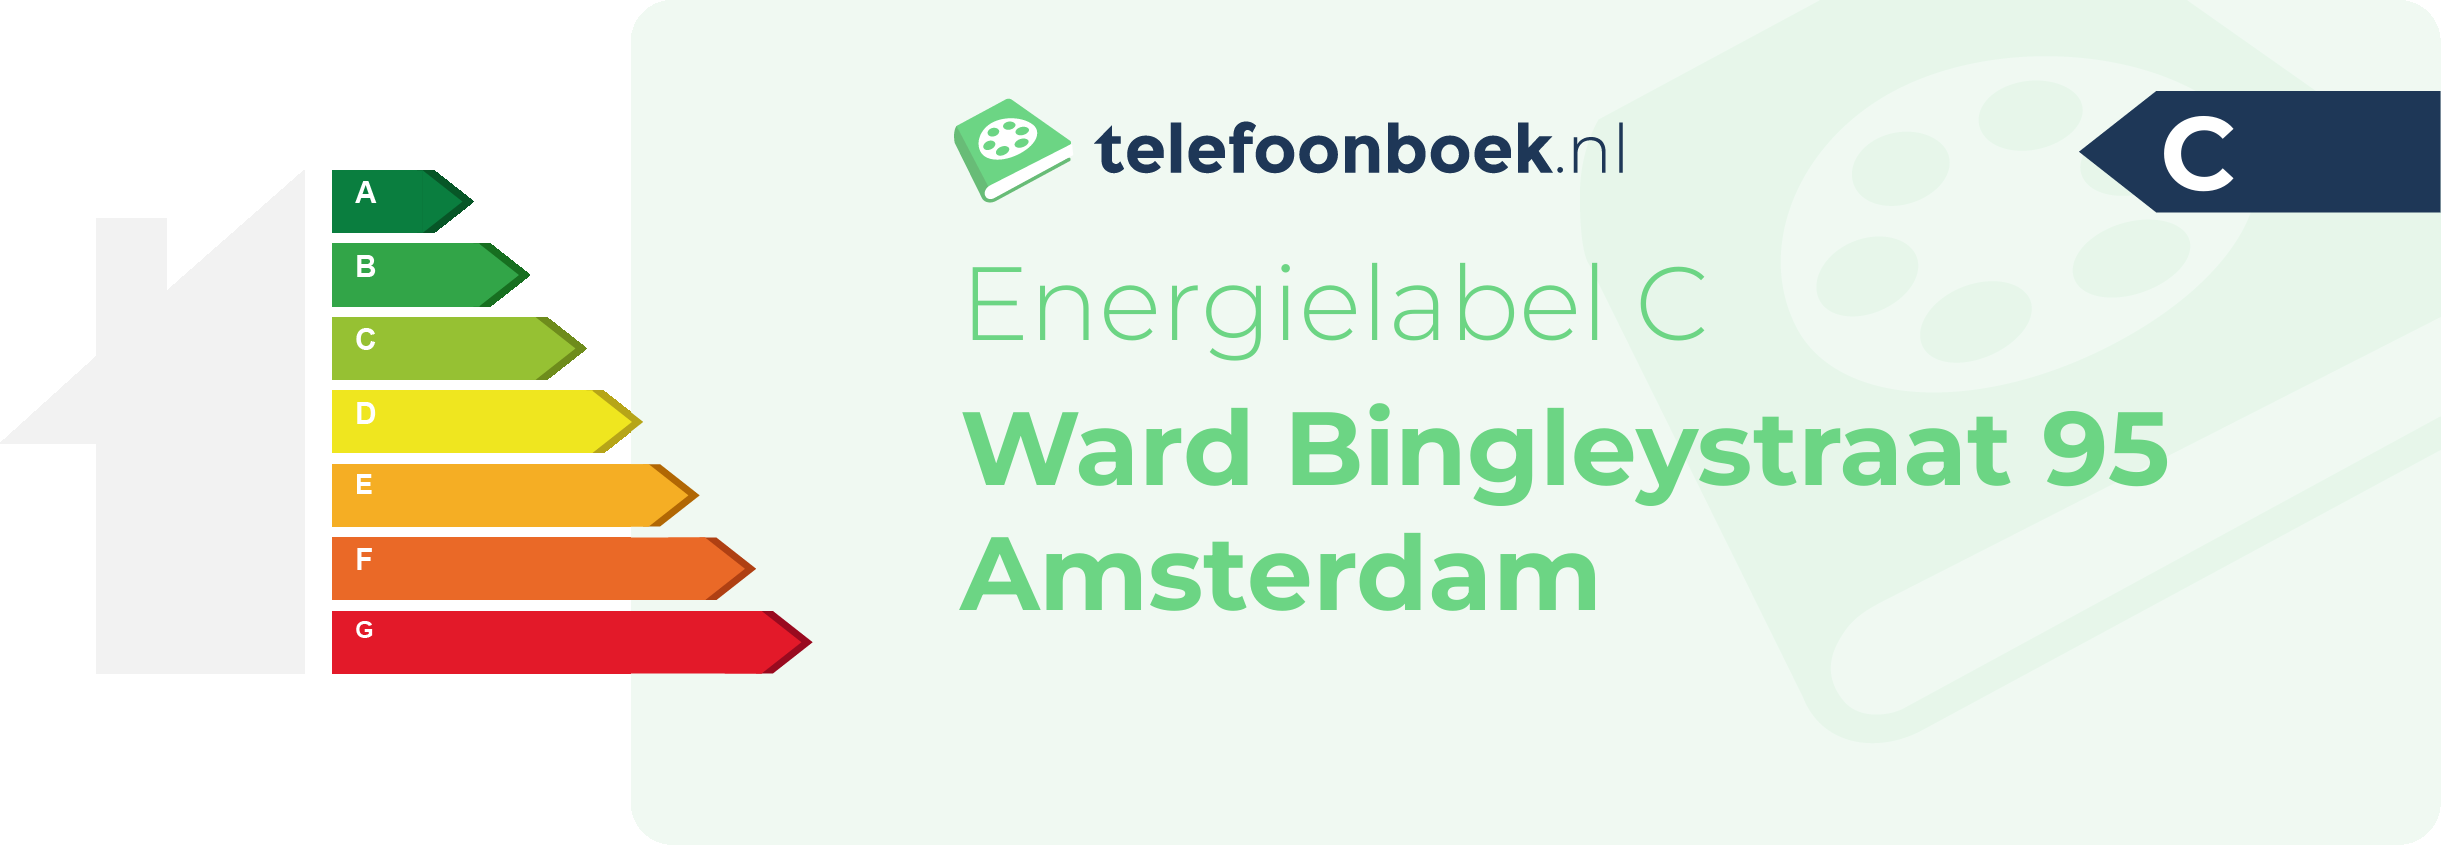 Energielabel Ward Bingleystraat 95 Amsterdam